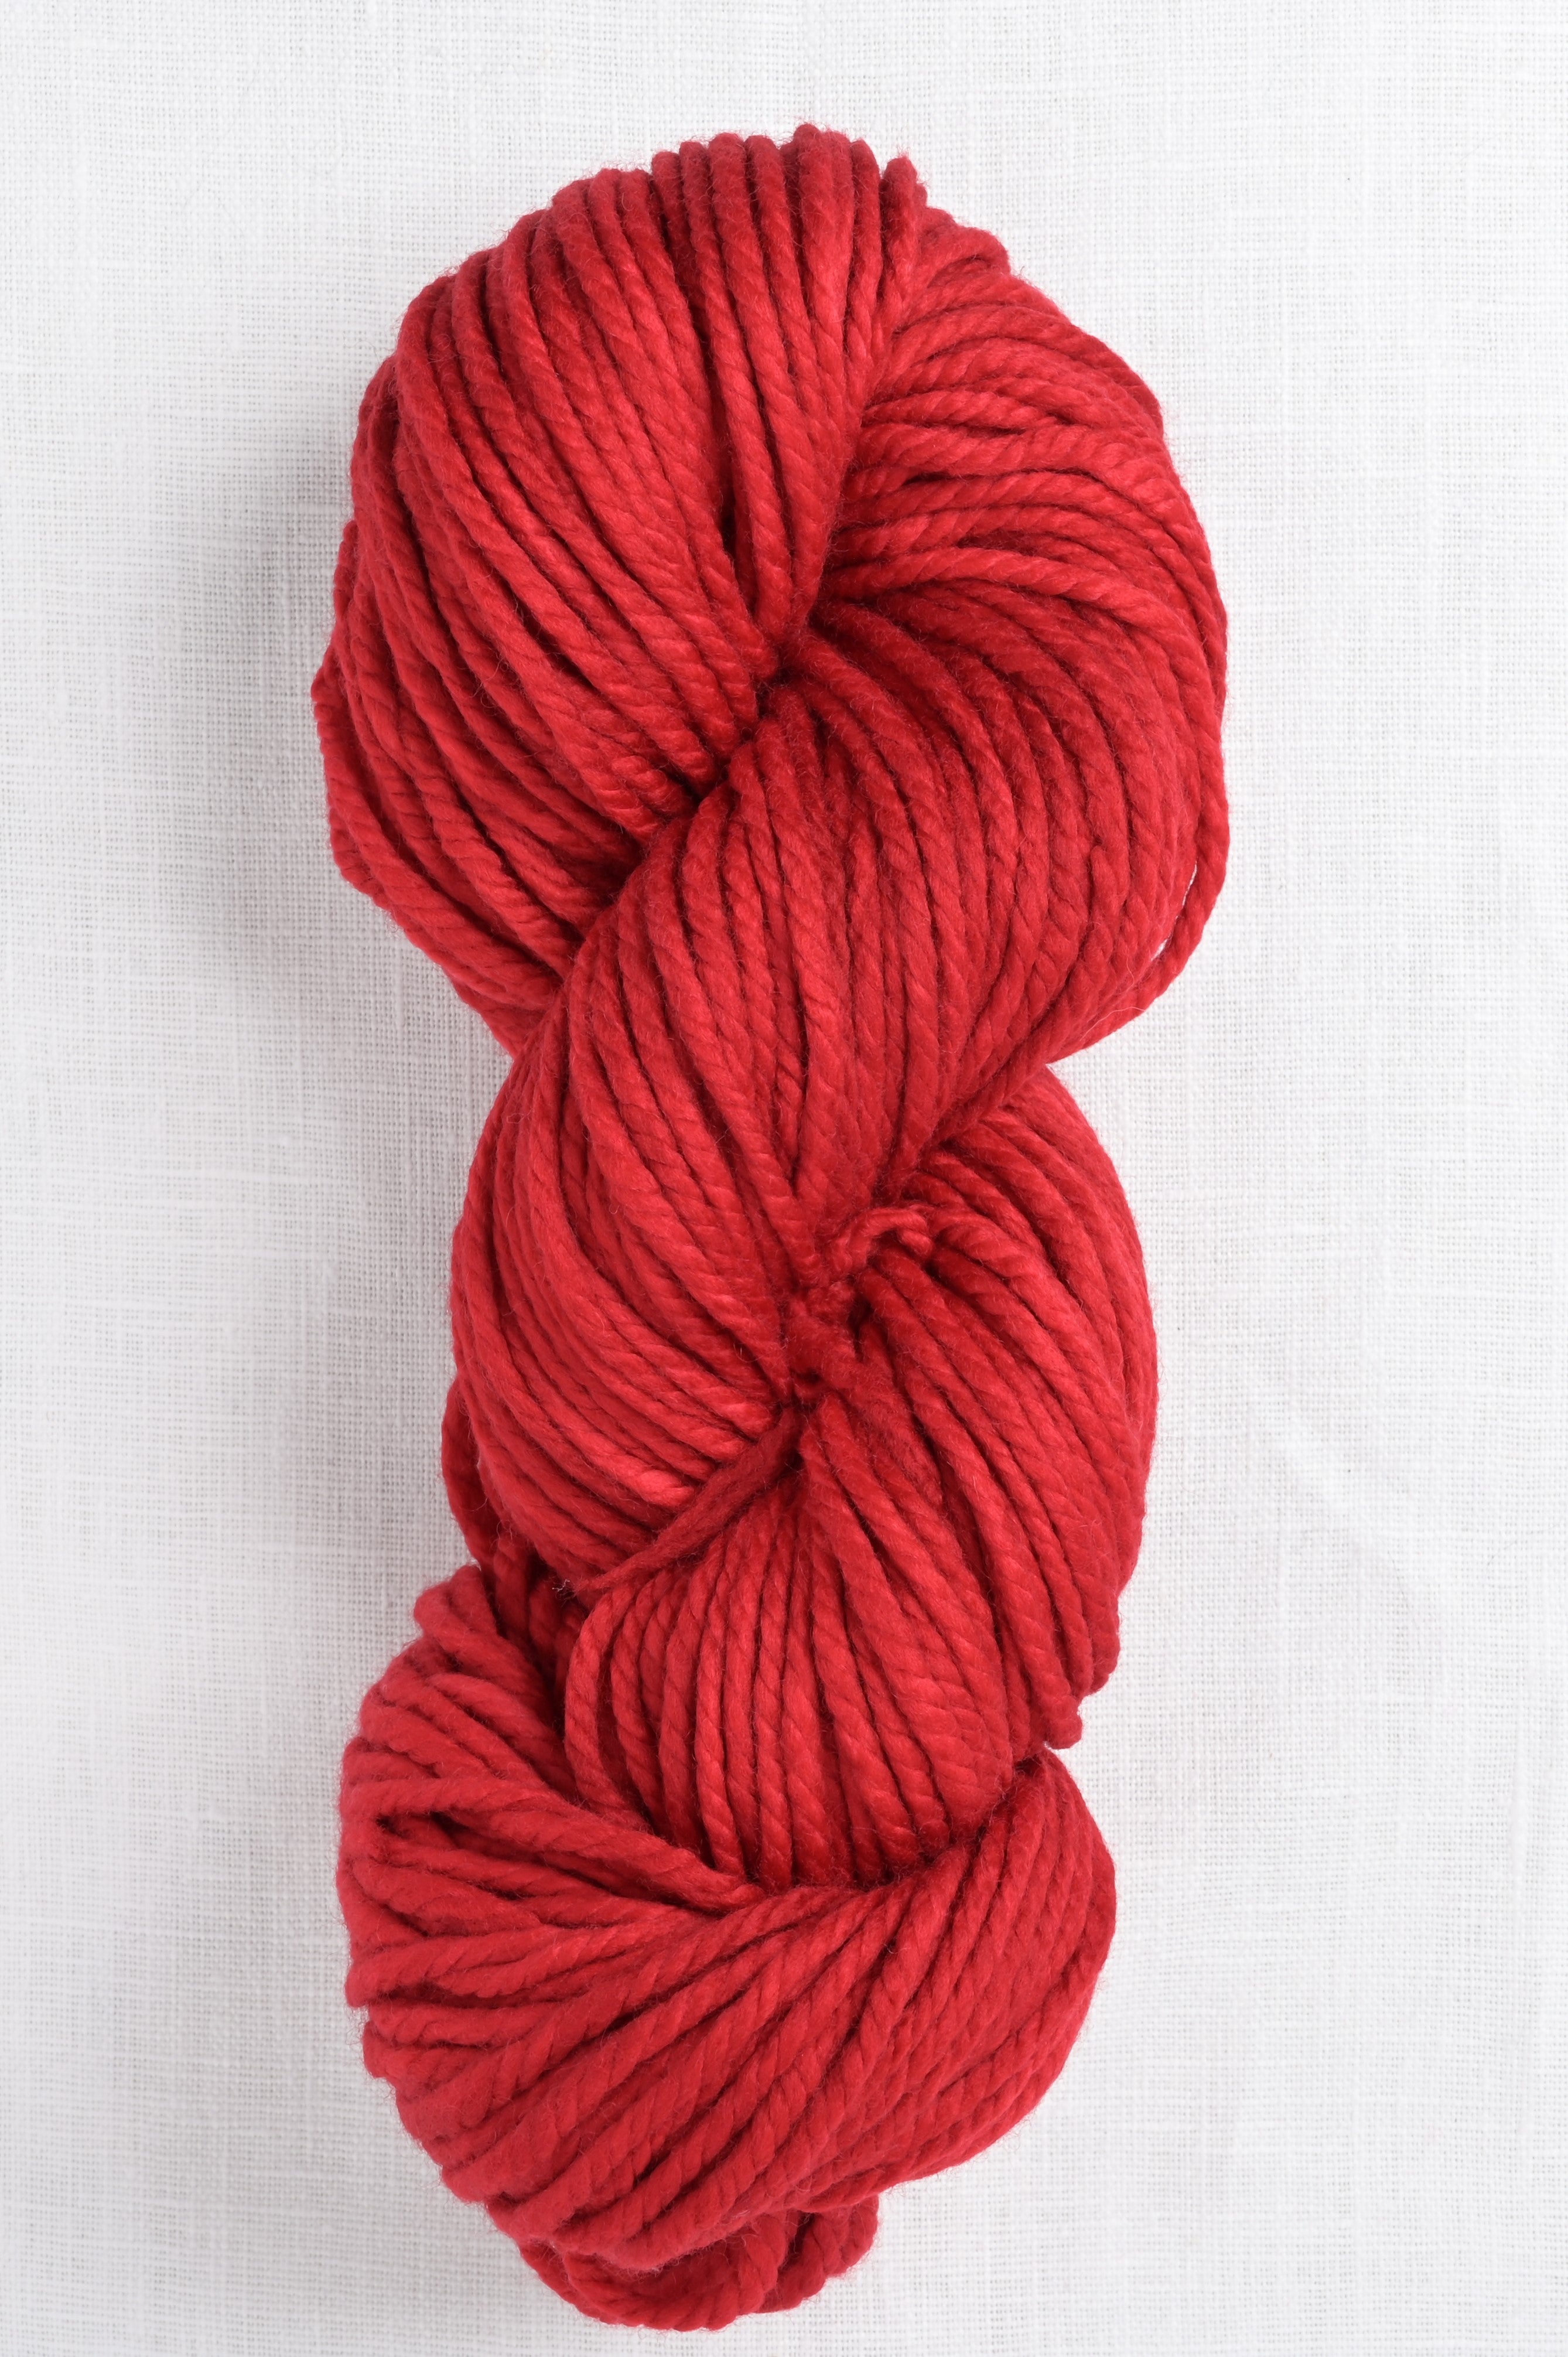 Malabrigo Chunky Yarn - 611 Ravelry Red at Jimmy Beans Wool